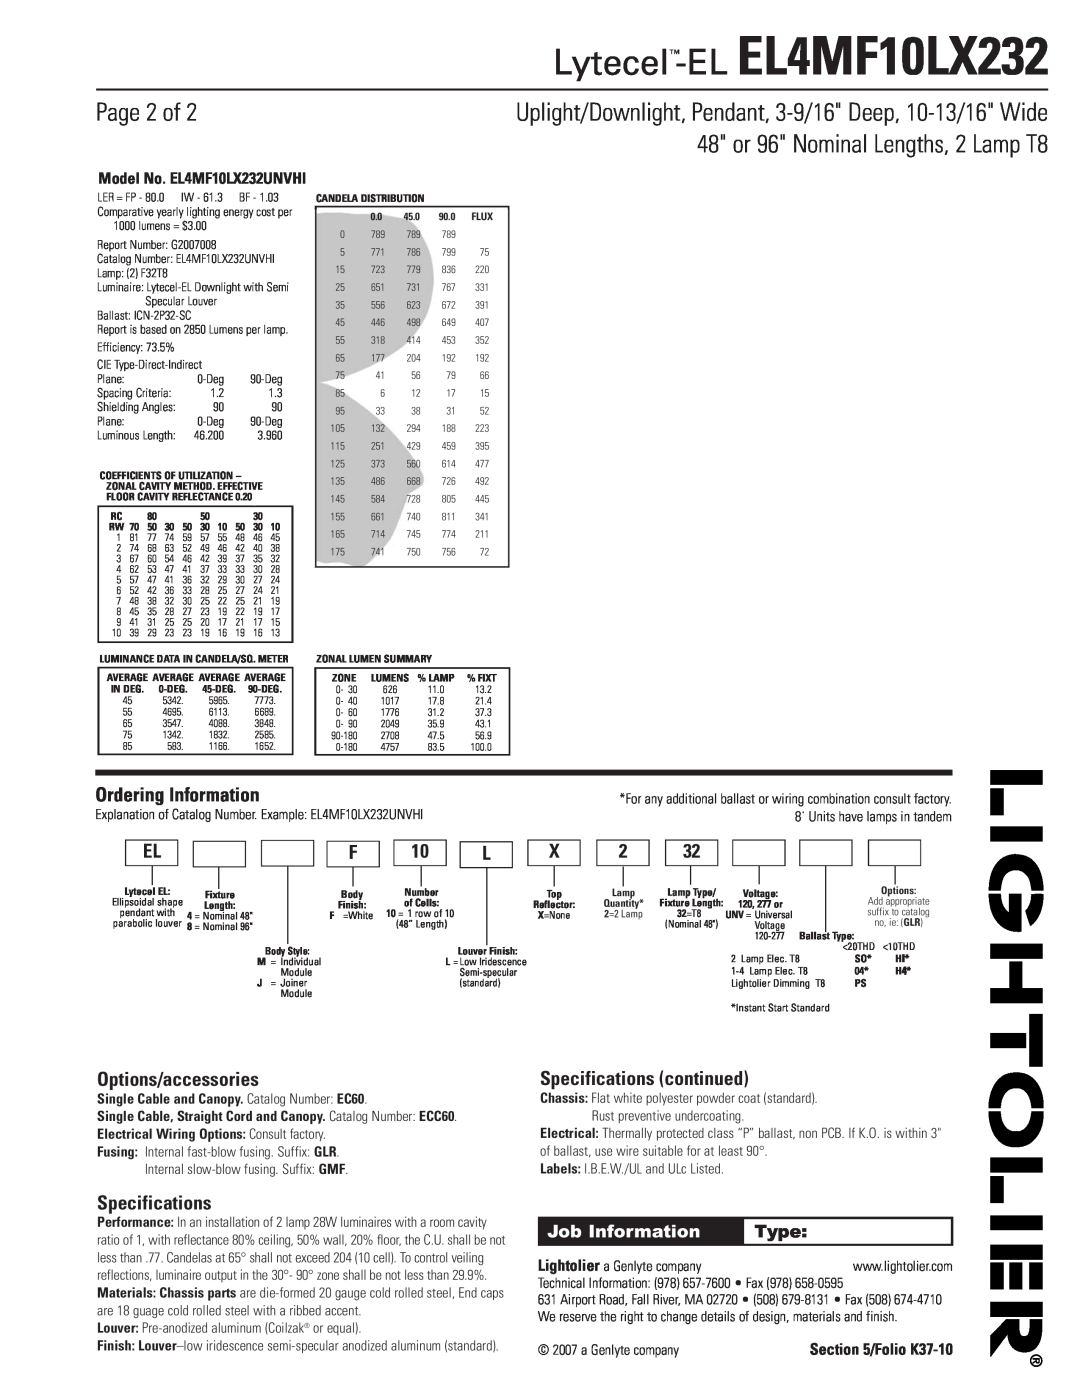 Lightolier dimensions Page 2 of, Lytecel-EL EL4MF10LX232, 48 or 96 Nominal Lengths, 2 Lamp T8, Ordering Information 